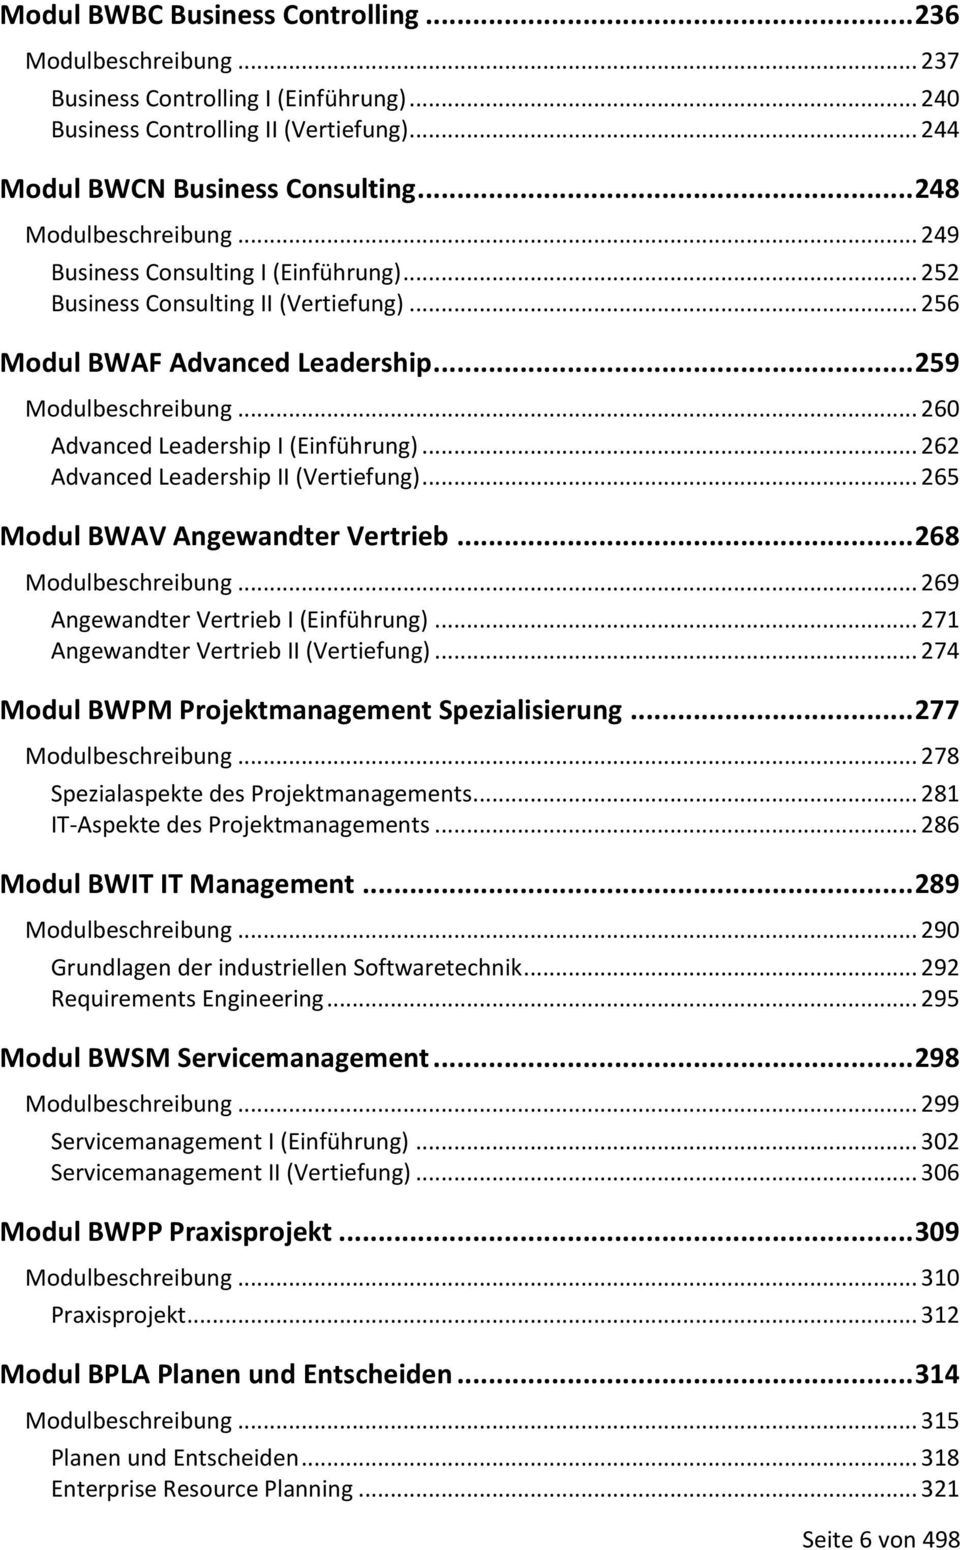 .. 260 Advanced Leadership I (Einführung)... 262 Advanced Leadership II (Vertiefung)... 265 Modul BWAV Angewandter Vertrieb... 268 Modulbeschreibung... 269 Angewandter Vertrieb I (Einführung).